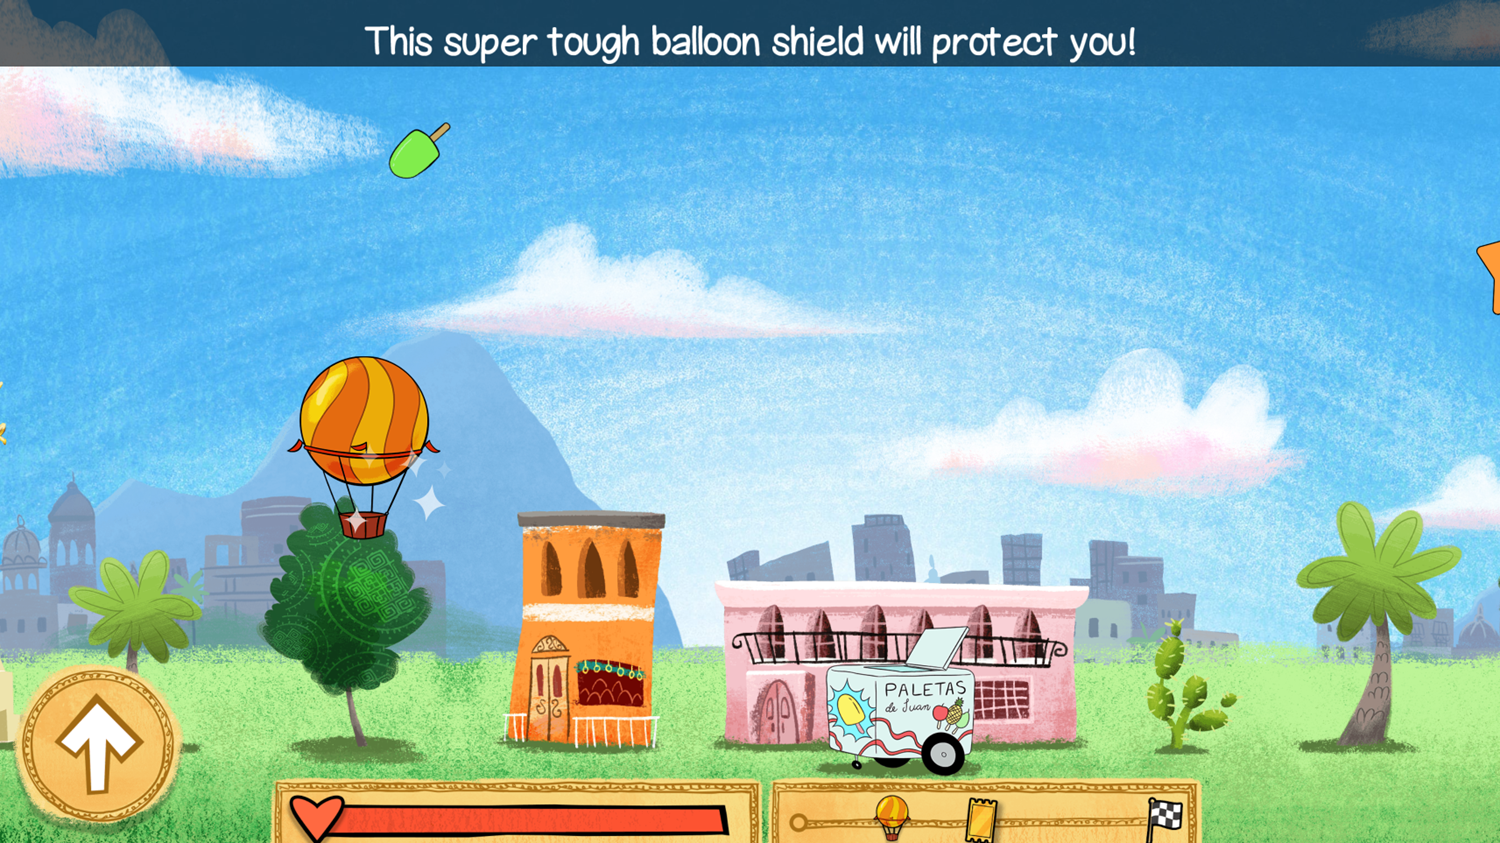 Let's Go Luna Fabuloso's Fantastic Flight Game Play Screenshot.